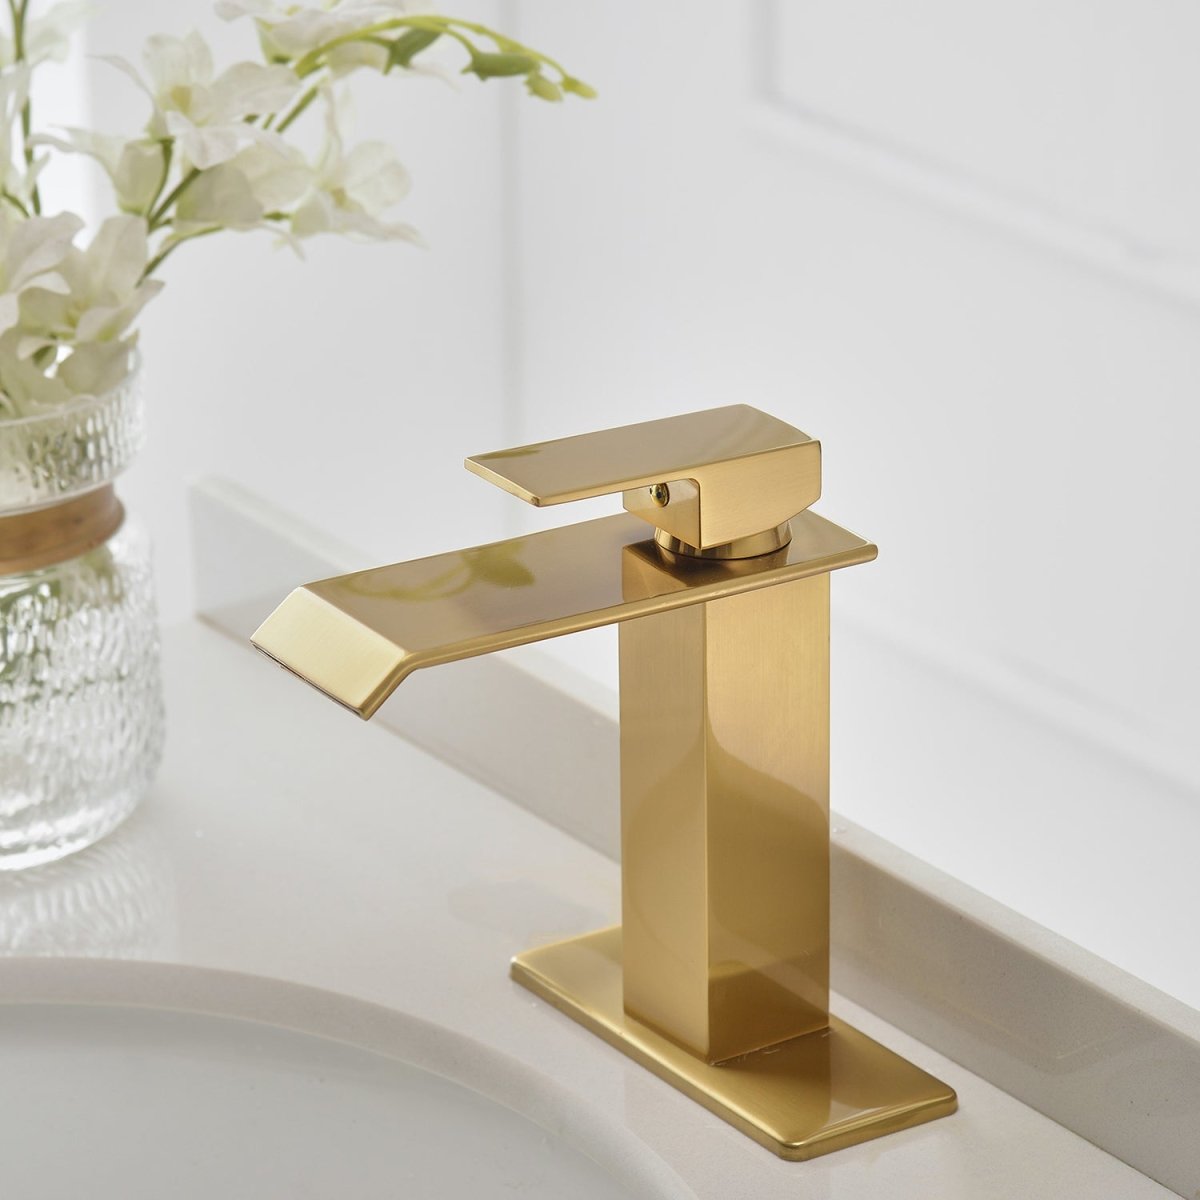 1 Hole 1 Handle Bathroom Faucet with Pop-up Drain Gold - buyfaucet.com